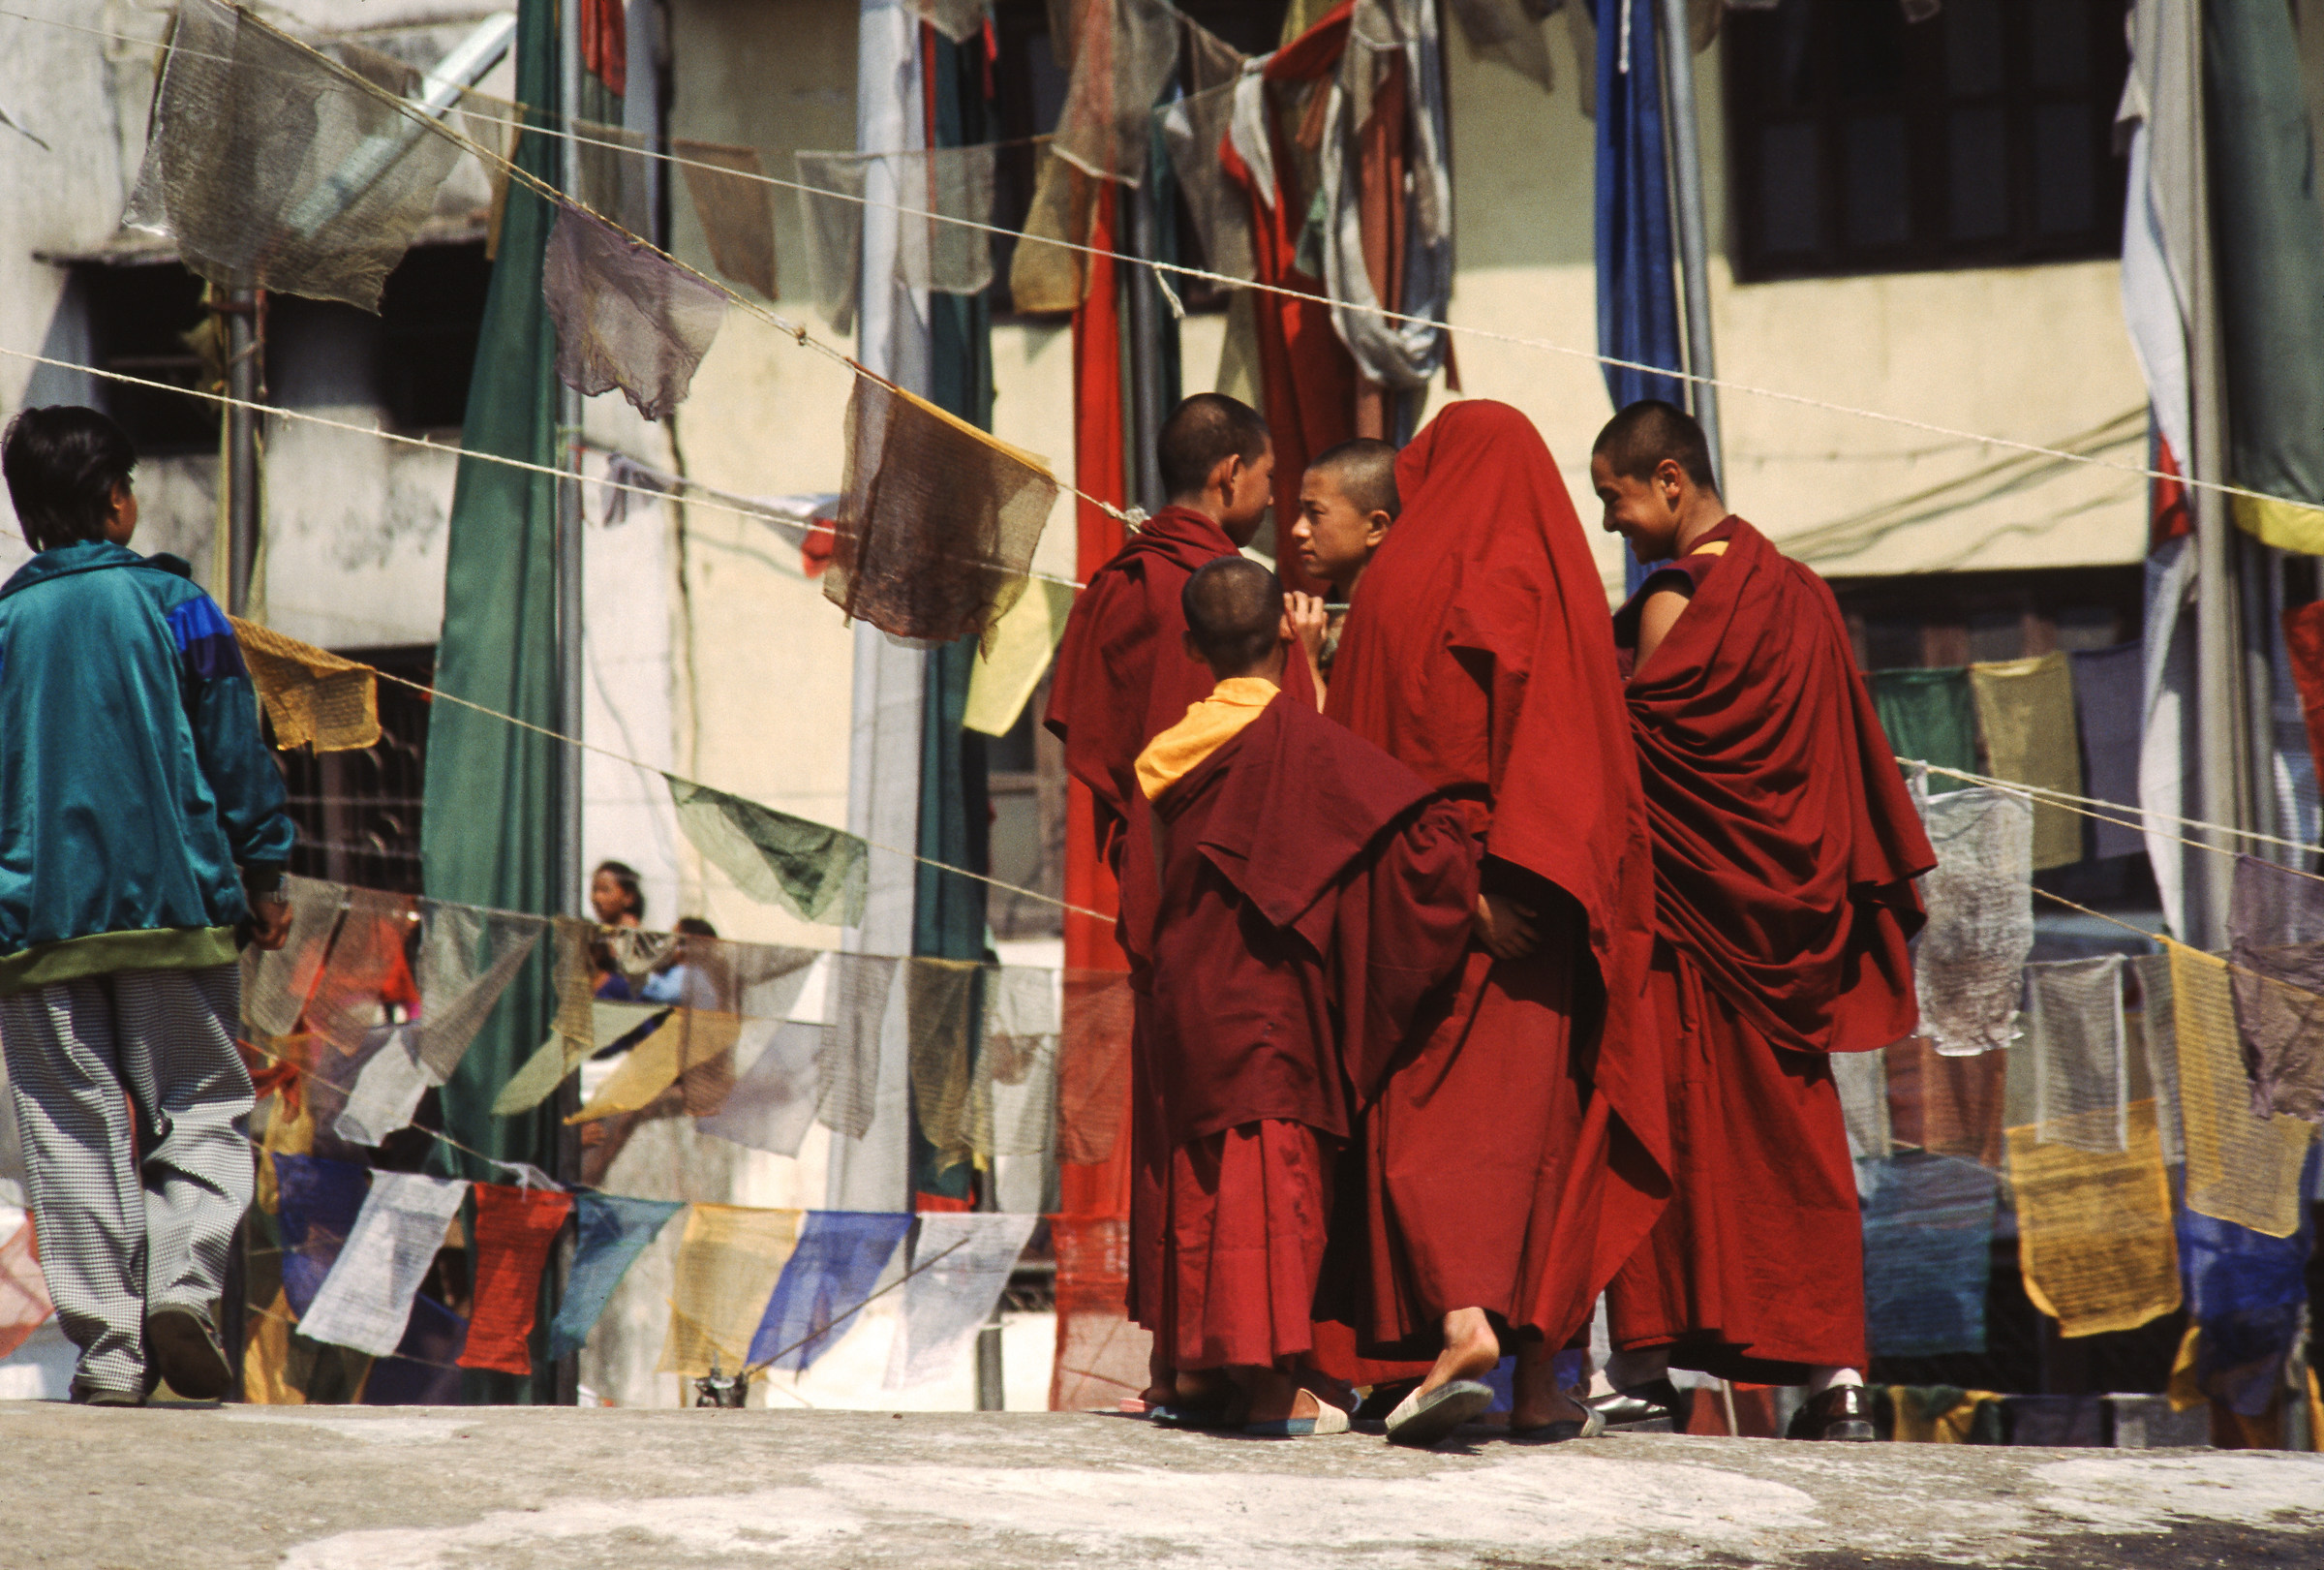 giovani monaci buddisti (katmandu)...